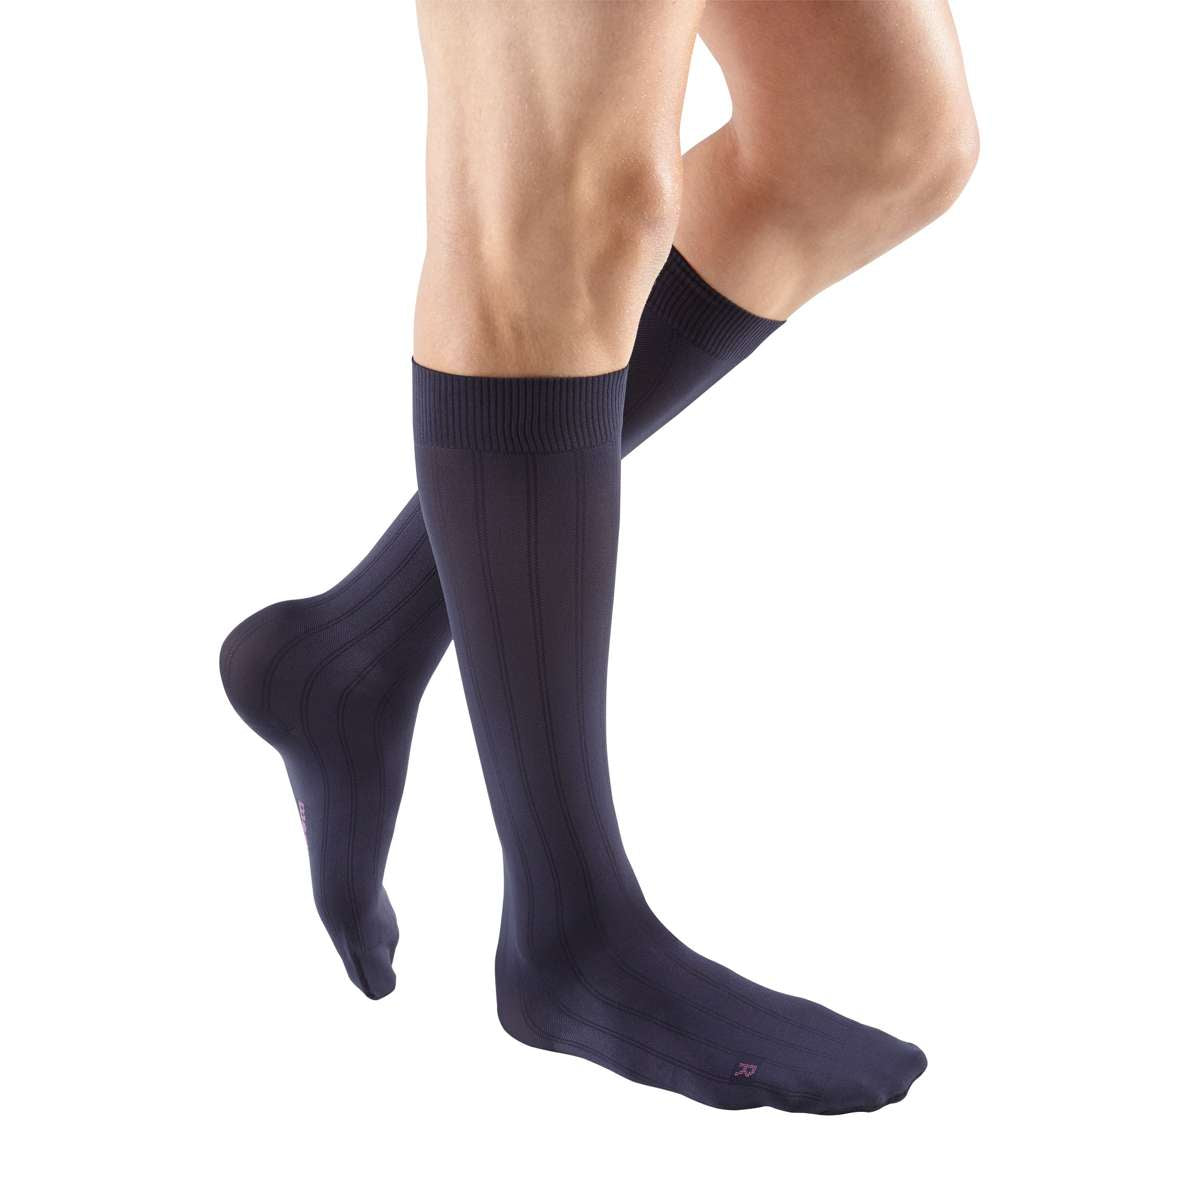 mediven for men classic 15-20 mmHg Calf High Closed Toe Compression Stockings